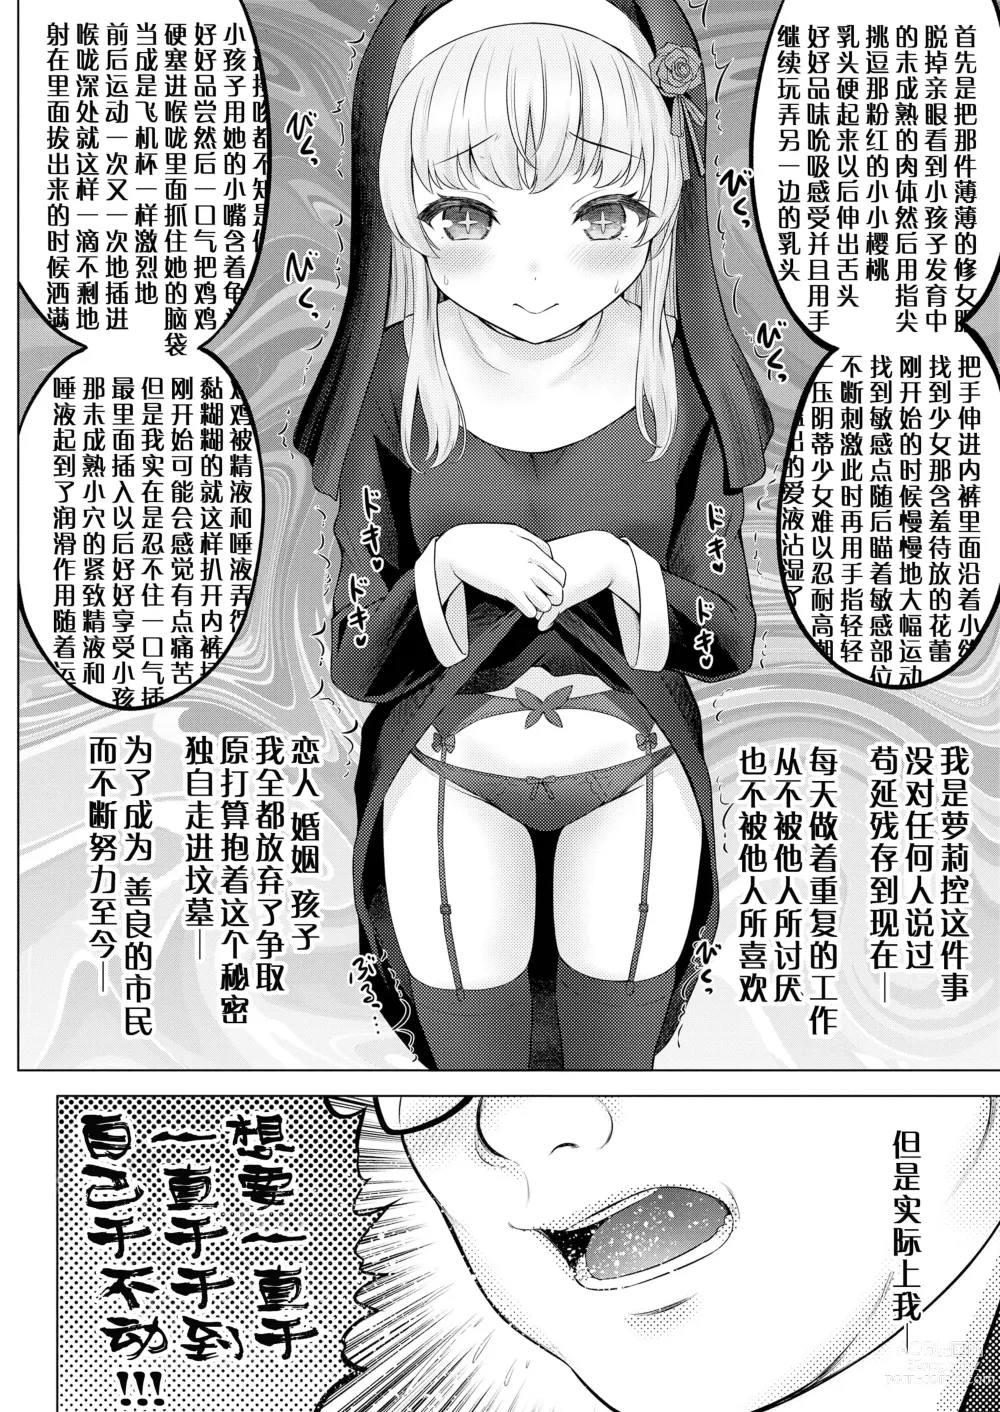 Page 6 of manga 圣少女玛妮